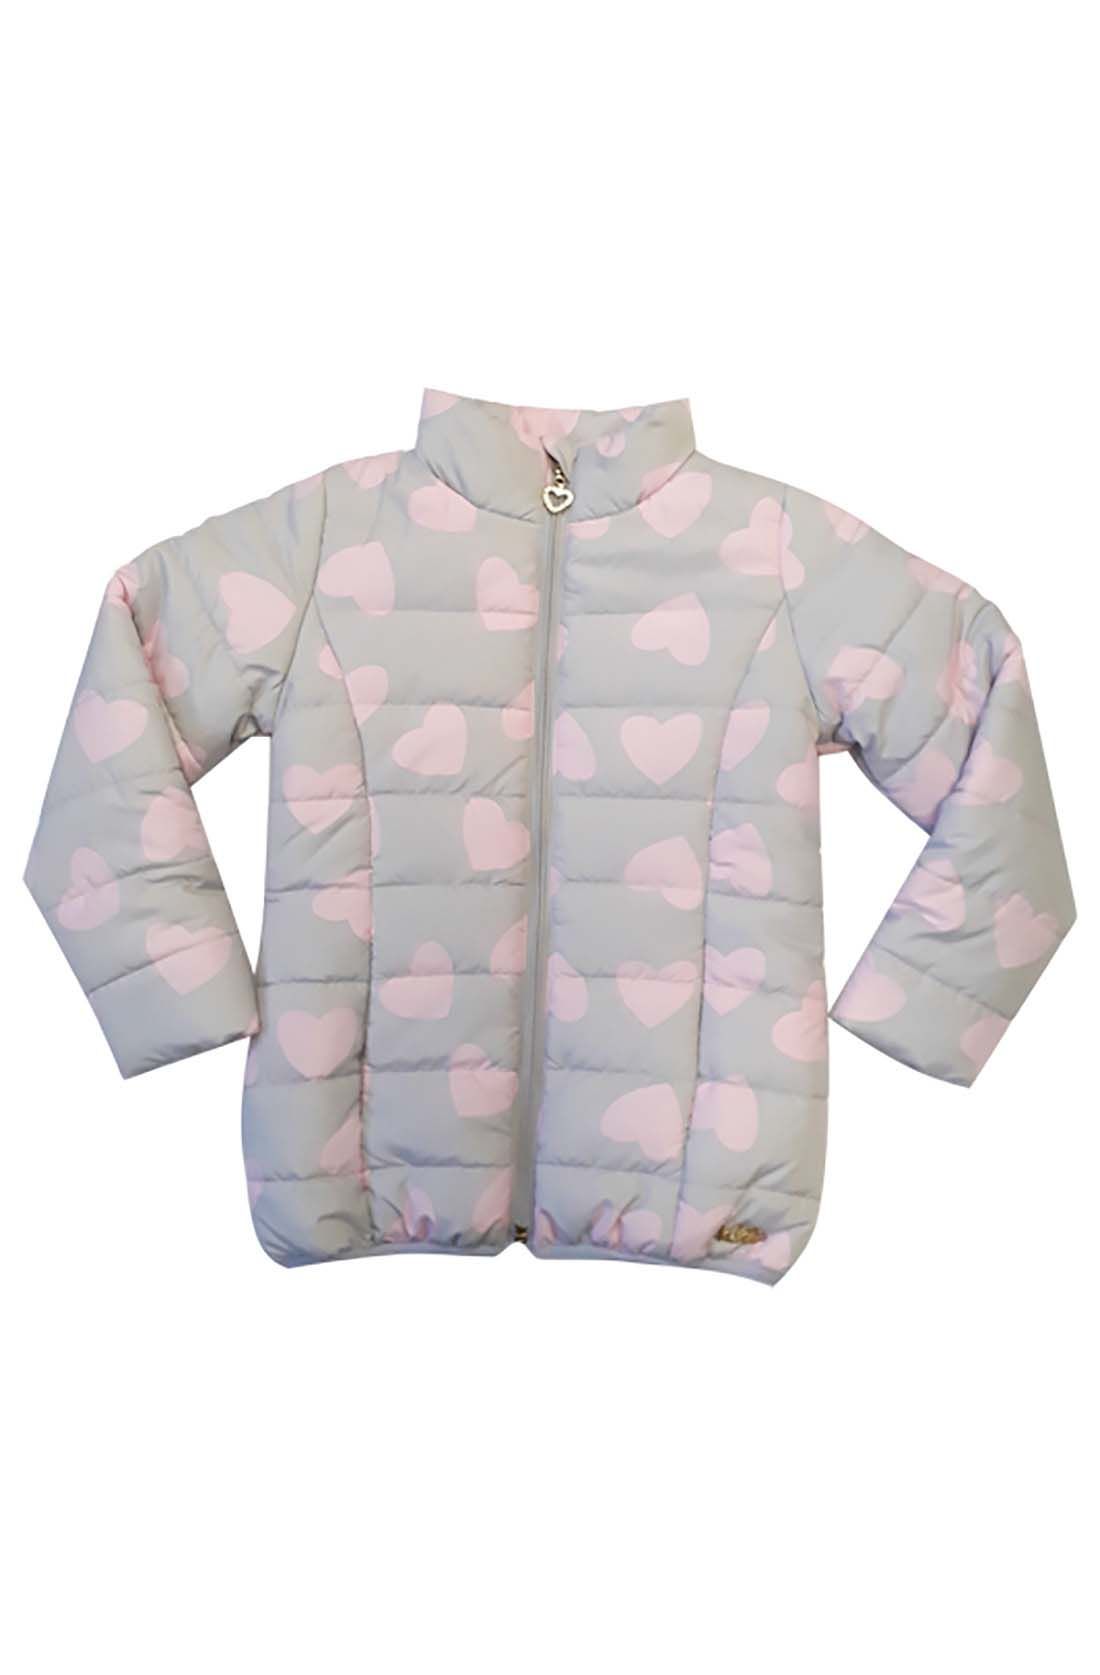 jaqueta nylon infantil feminina